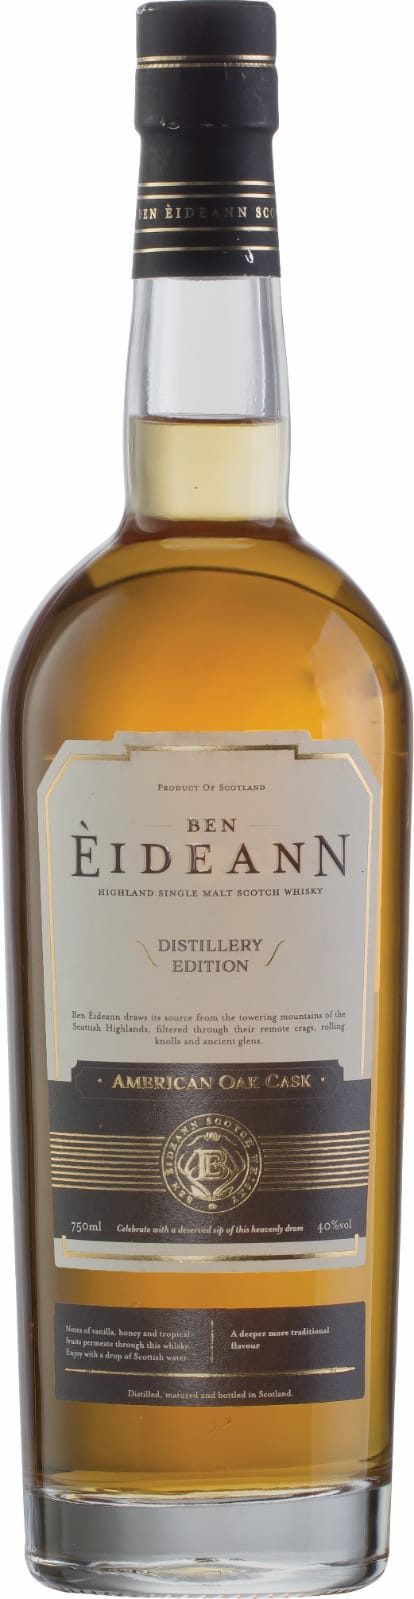 Ben Èideann Distillery Edition American Oak Cask